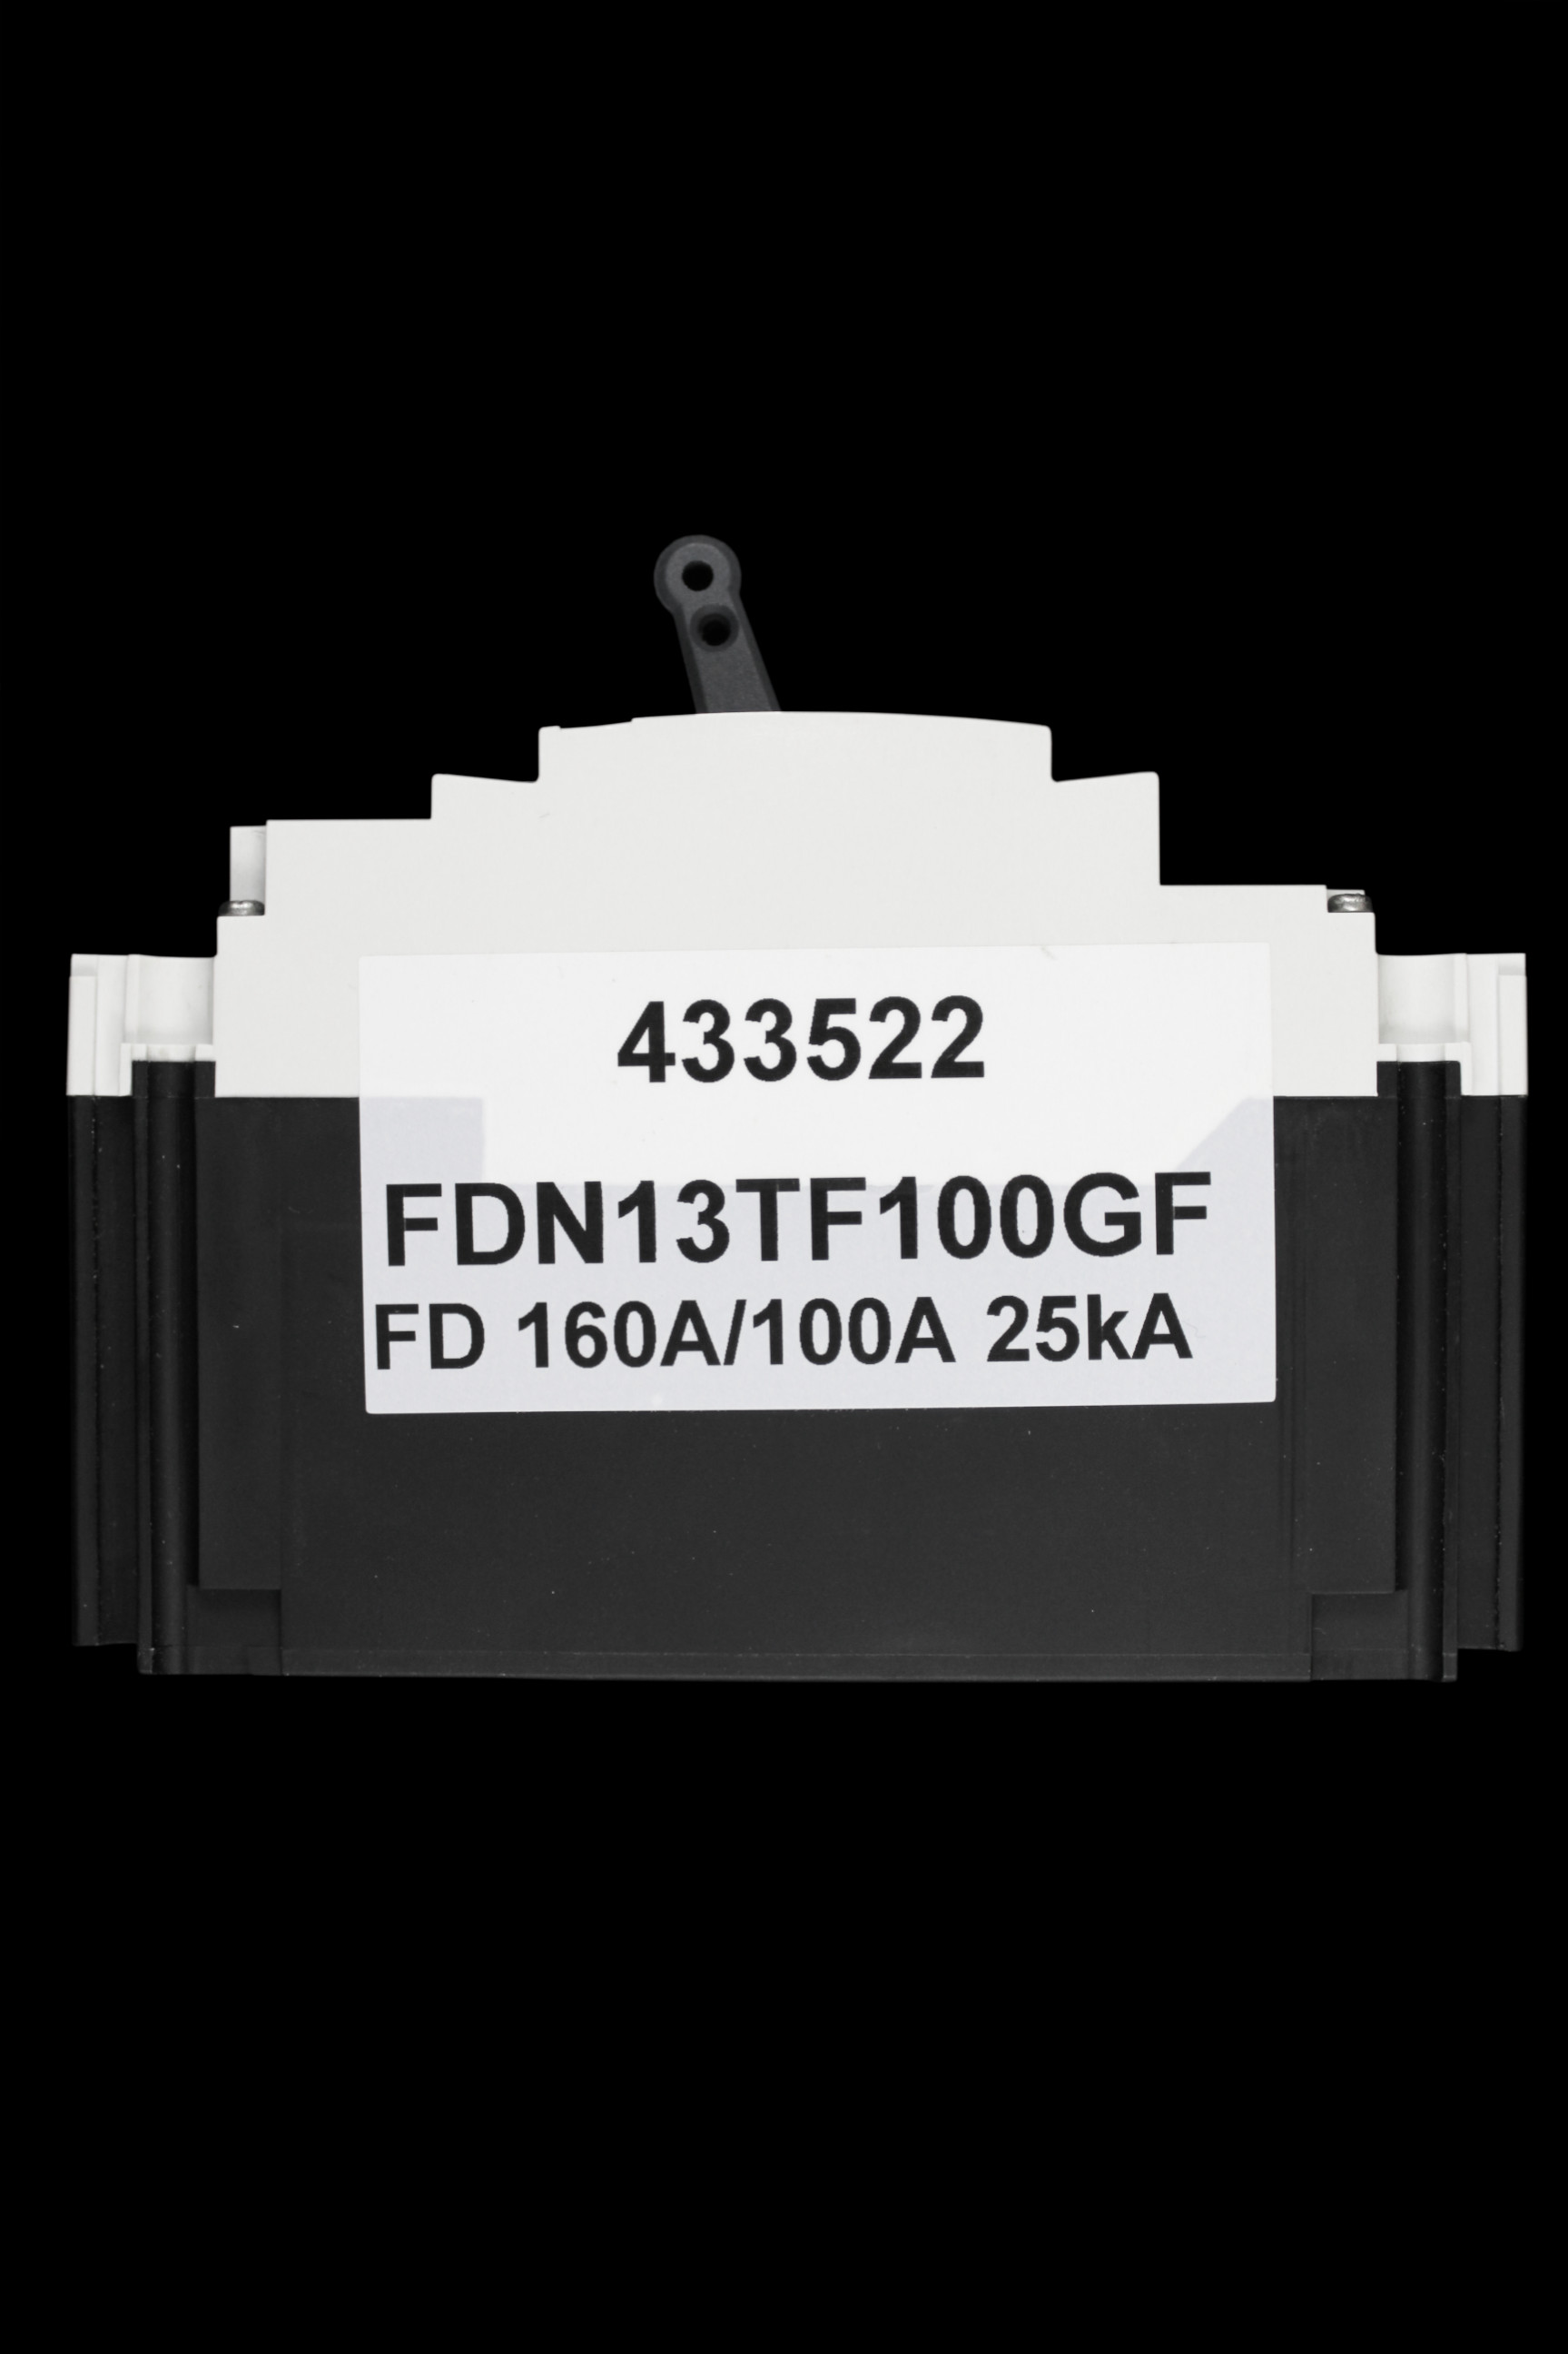 GENERAL ELECTRIC 100 AMP 25kA MCCB FDN13TF100GF RECORD PLUS 433522